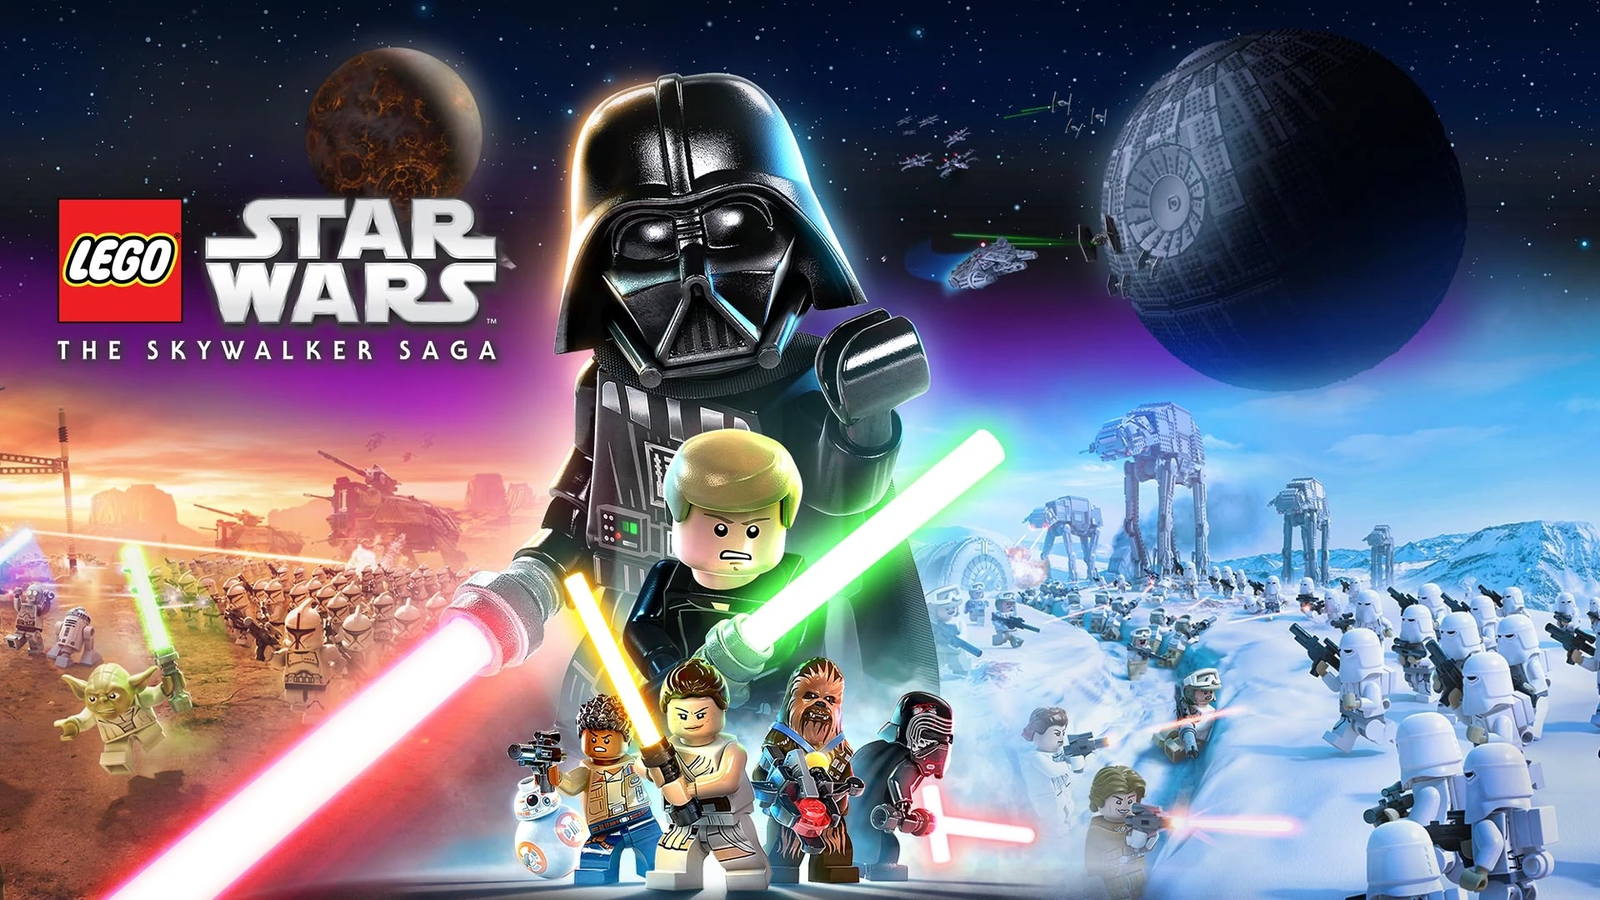 Lego Star Wars: The Skywalker Saga iPhone iOS Game Download Here - GDV